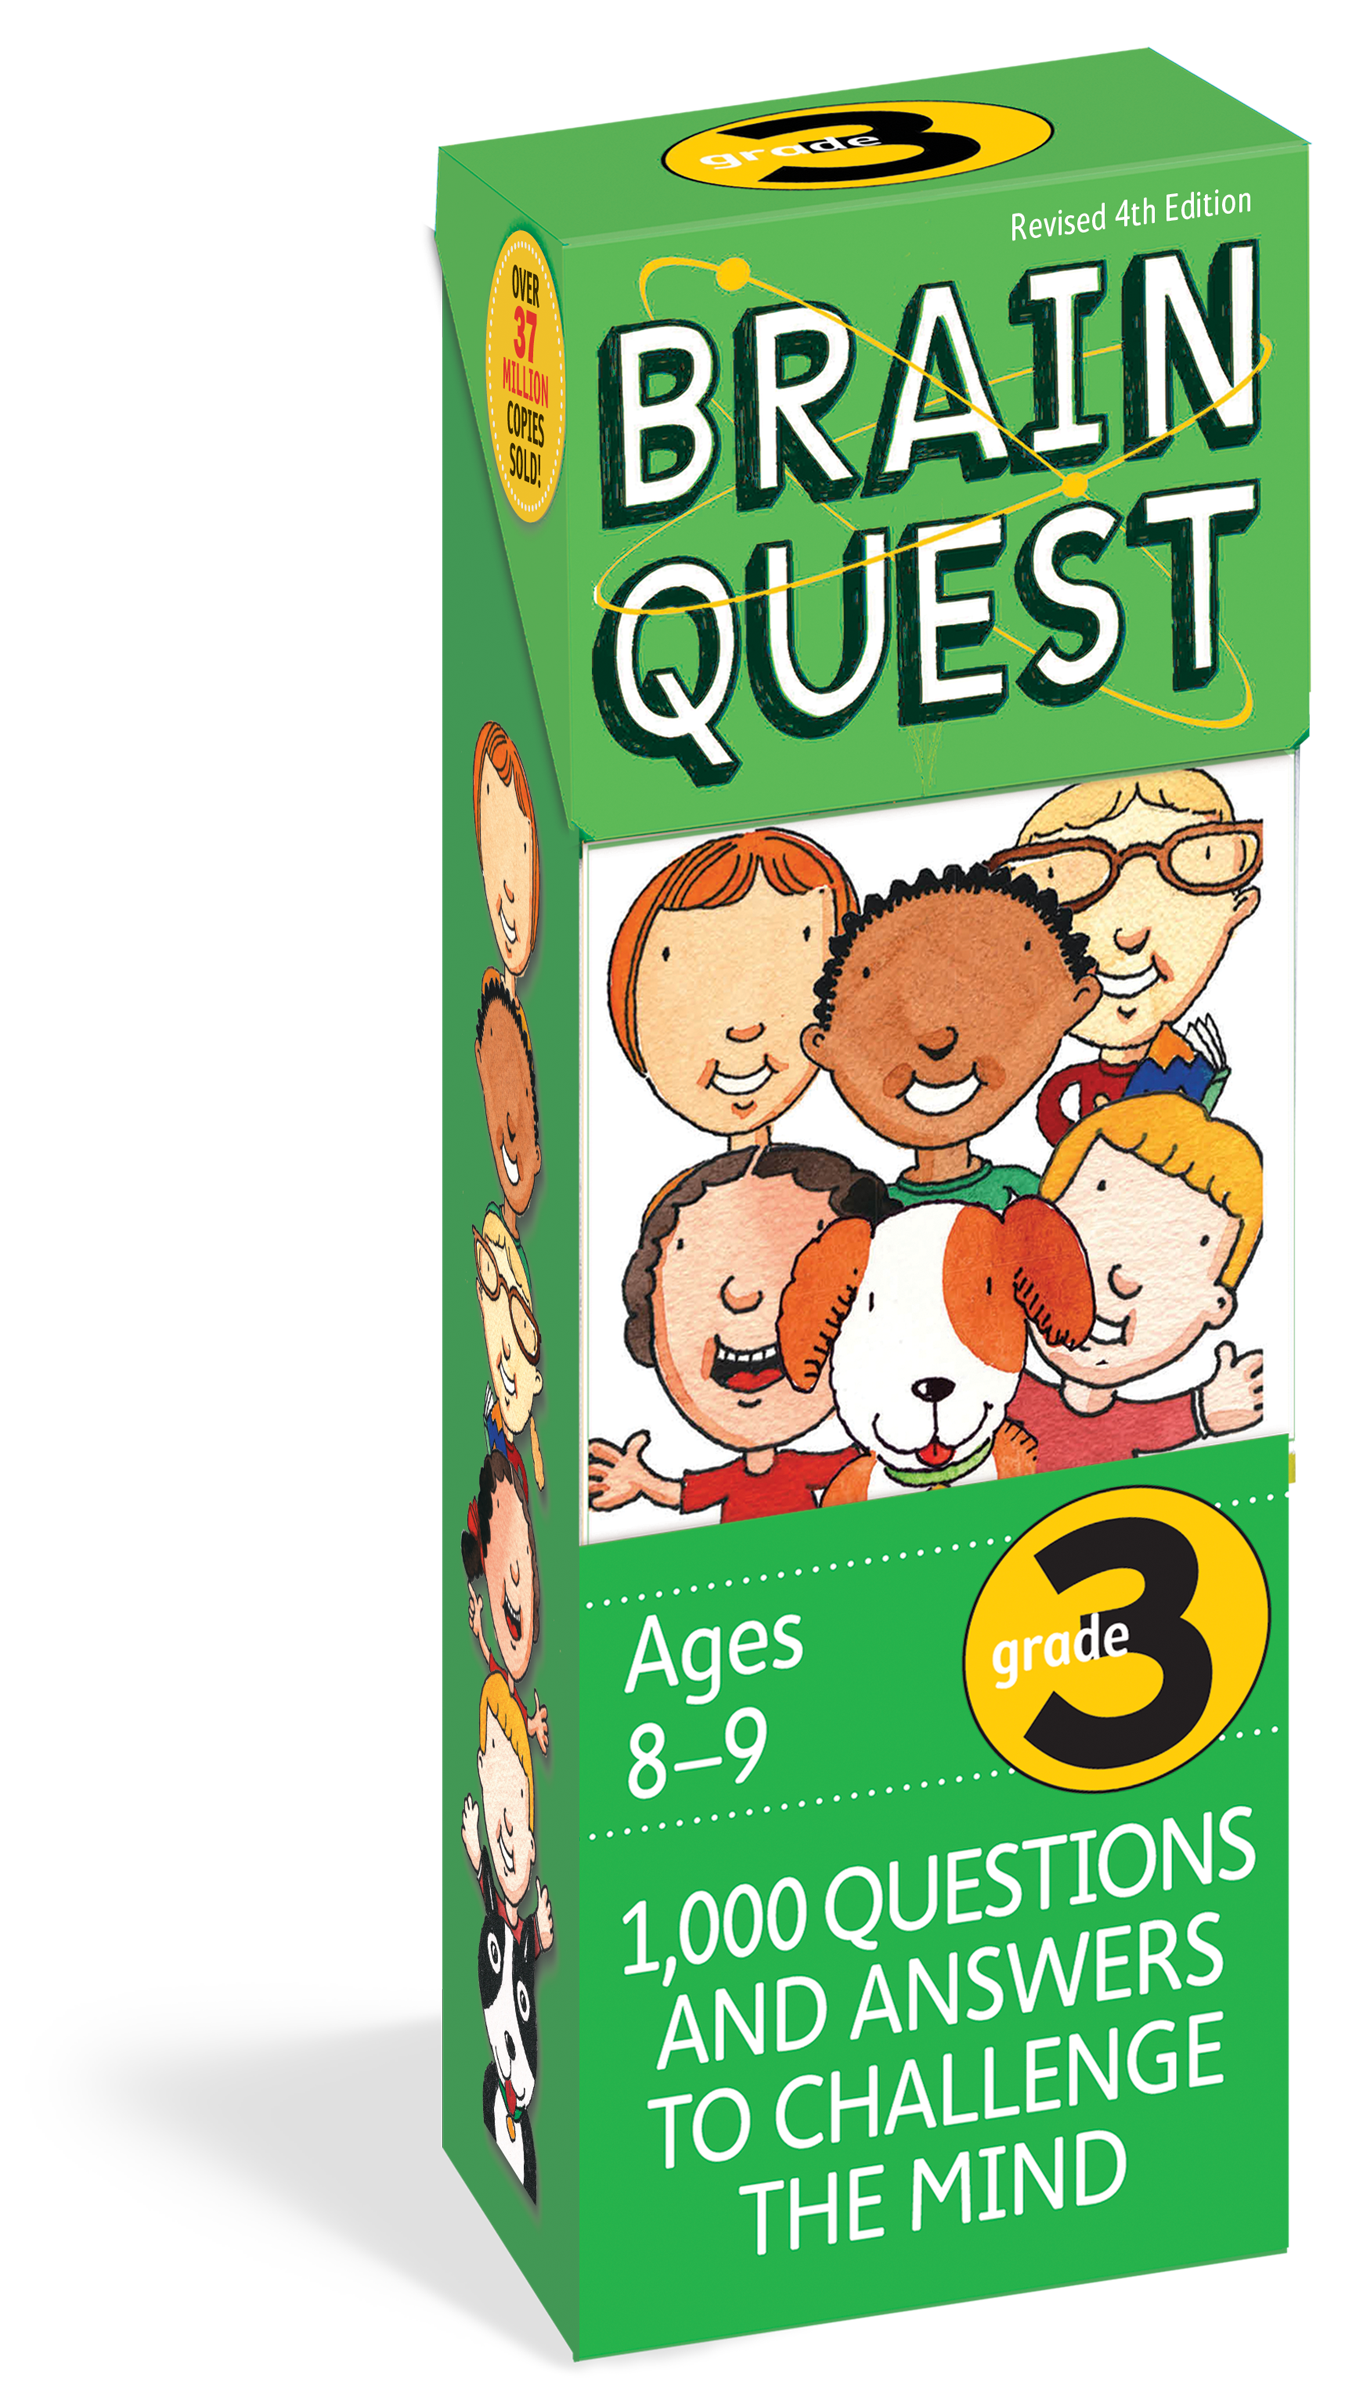 Brain Quest - 3rd Grade    